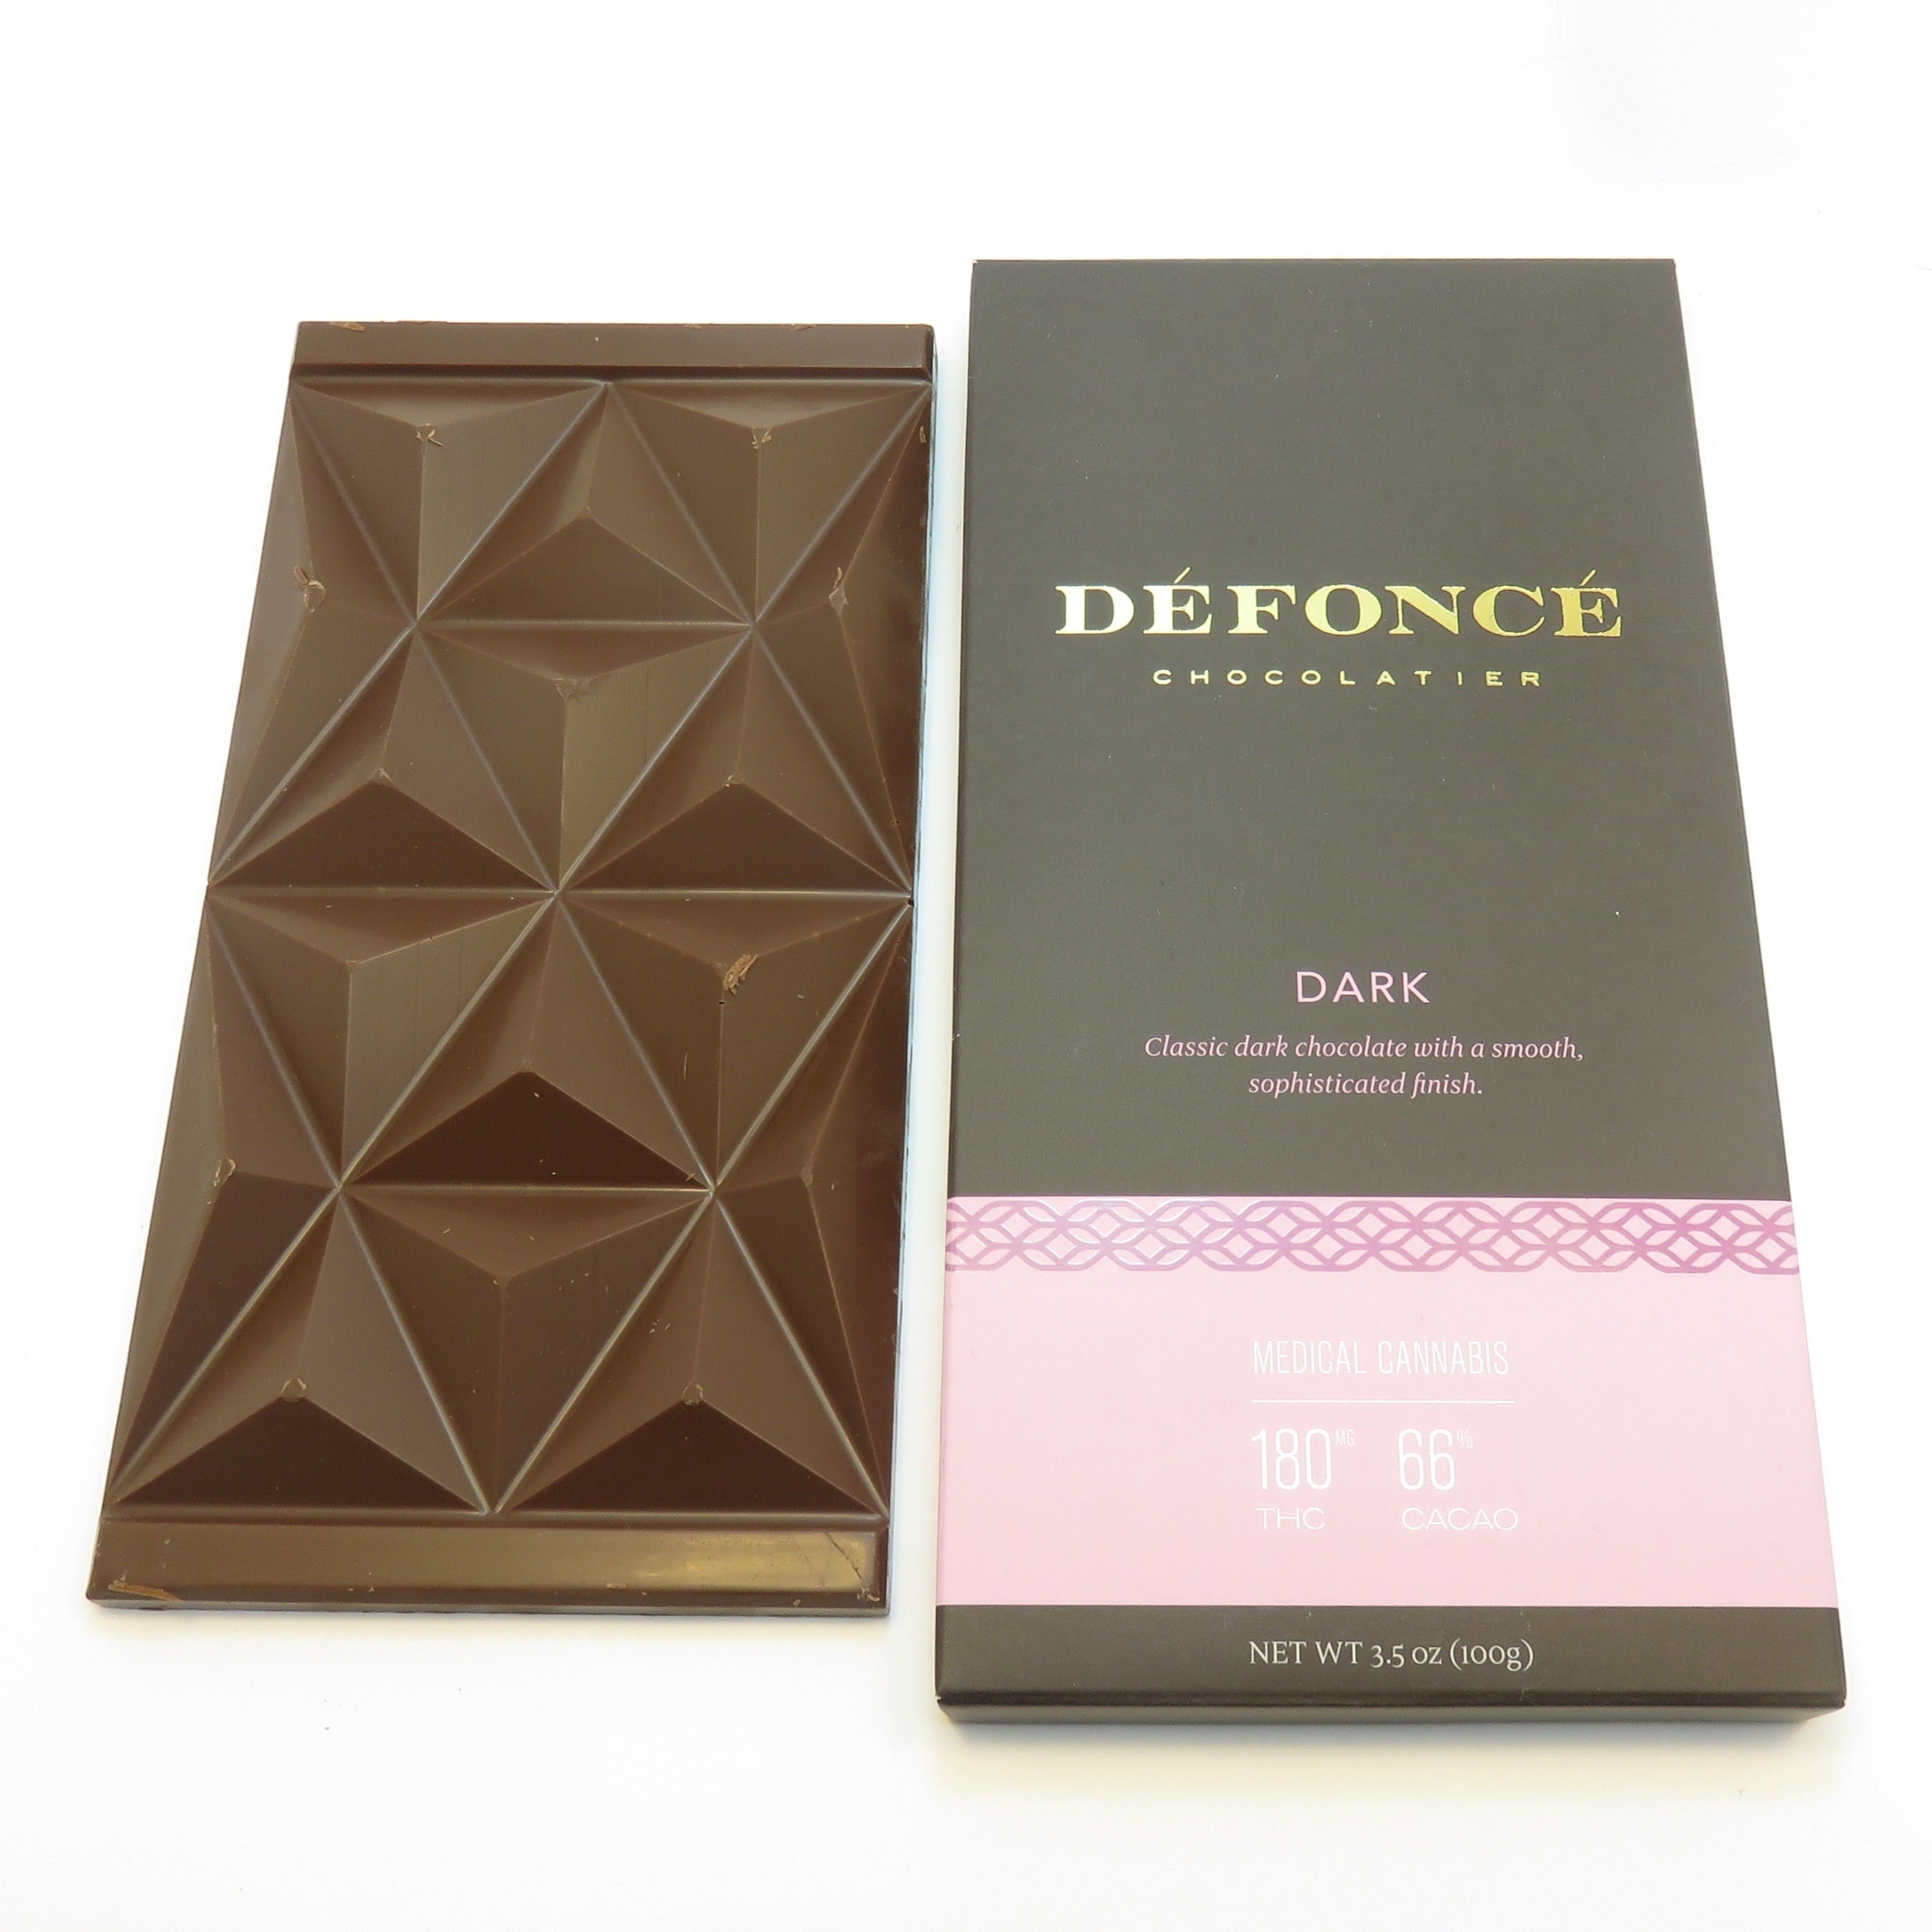 Defonce - 90mg THC - Dark Chocolate Bar